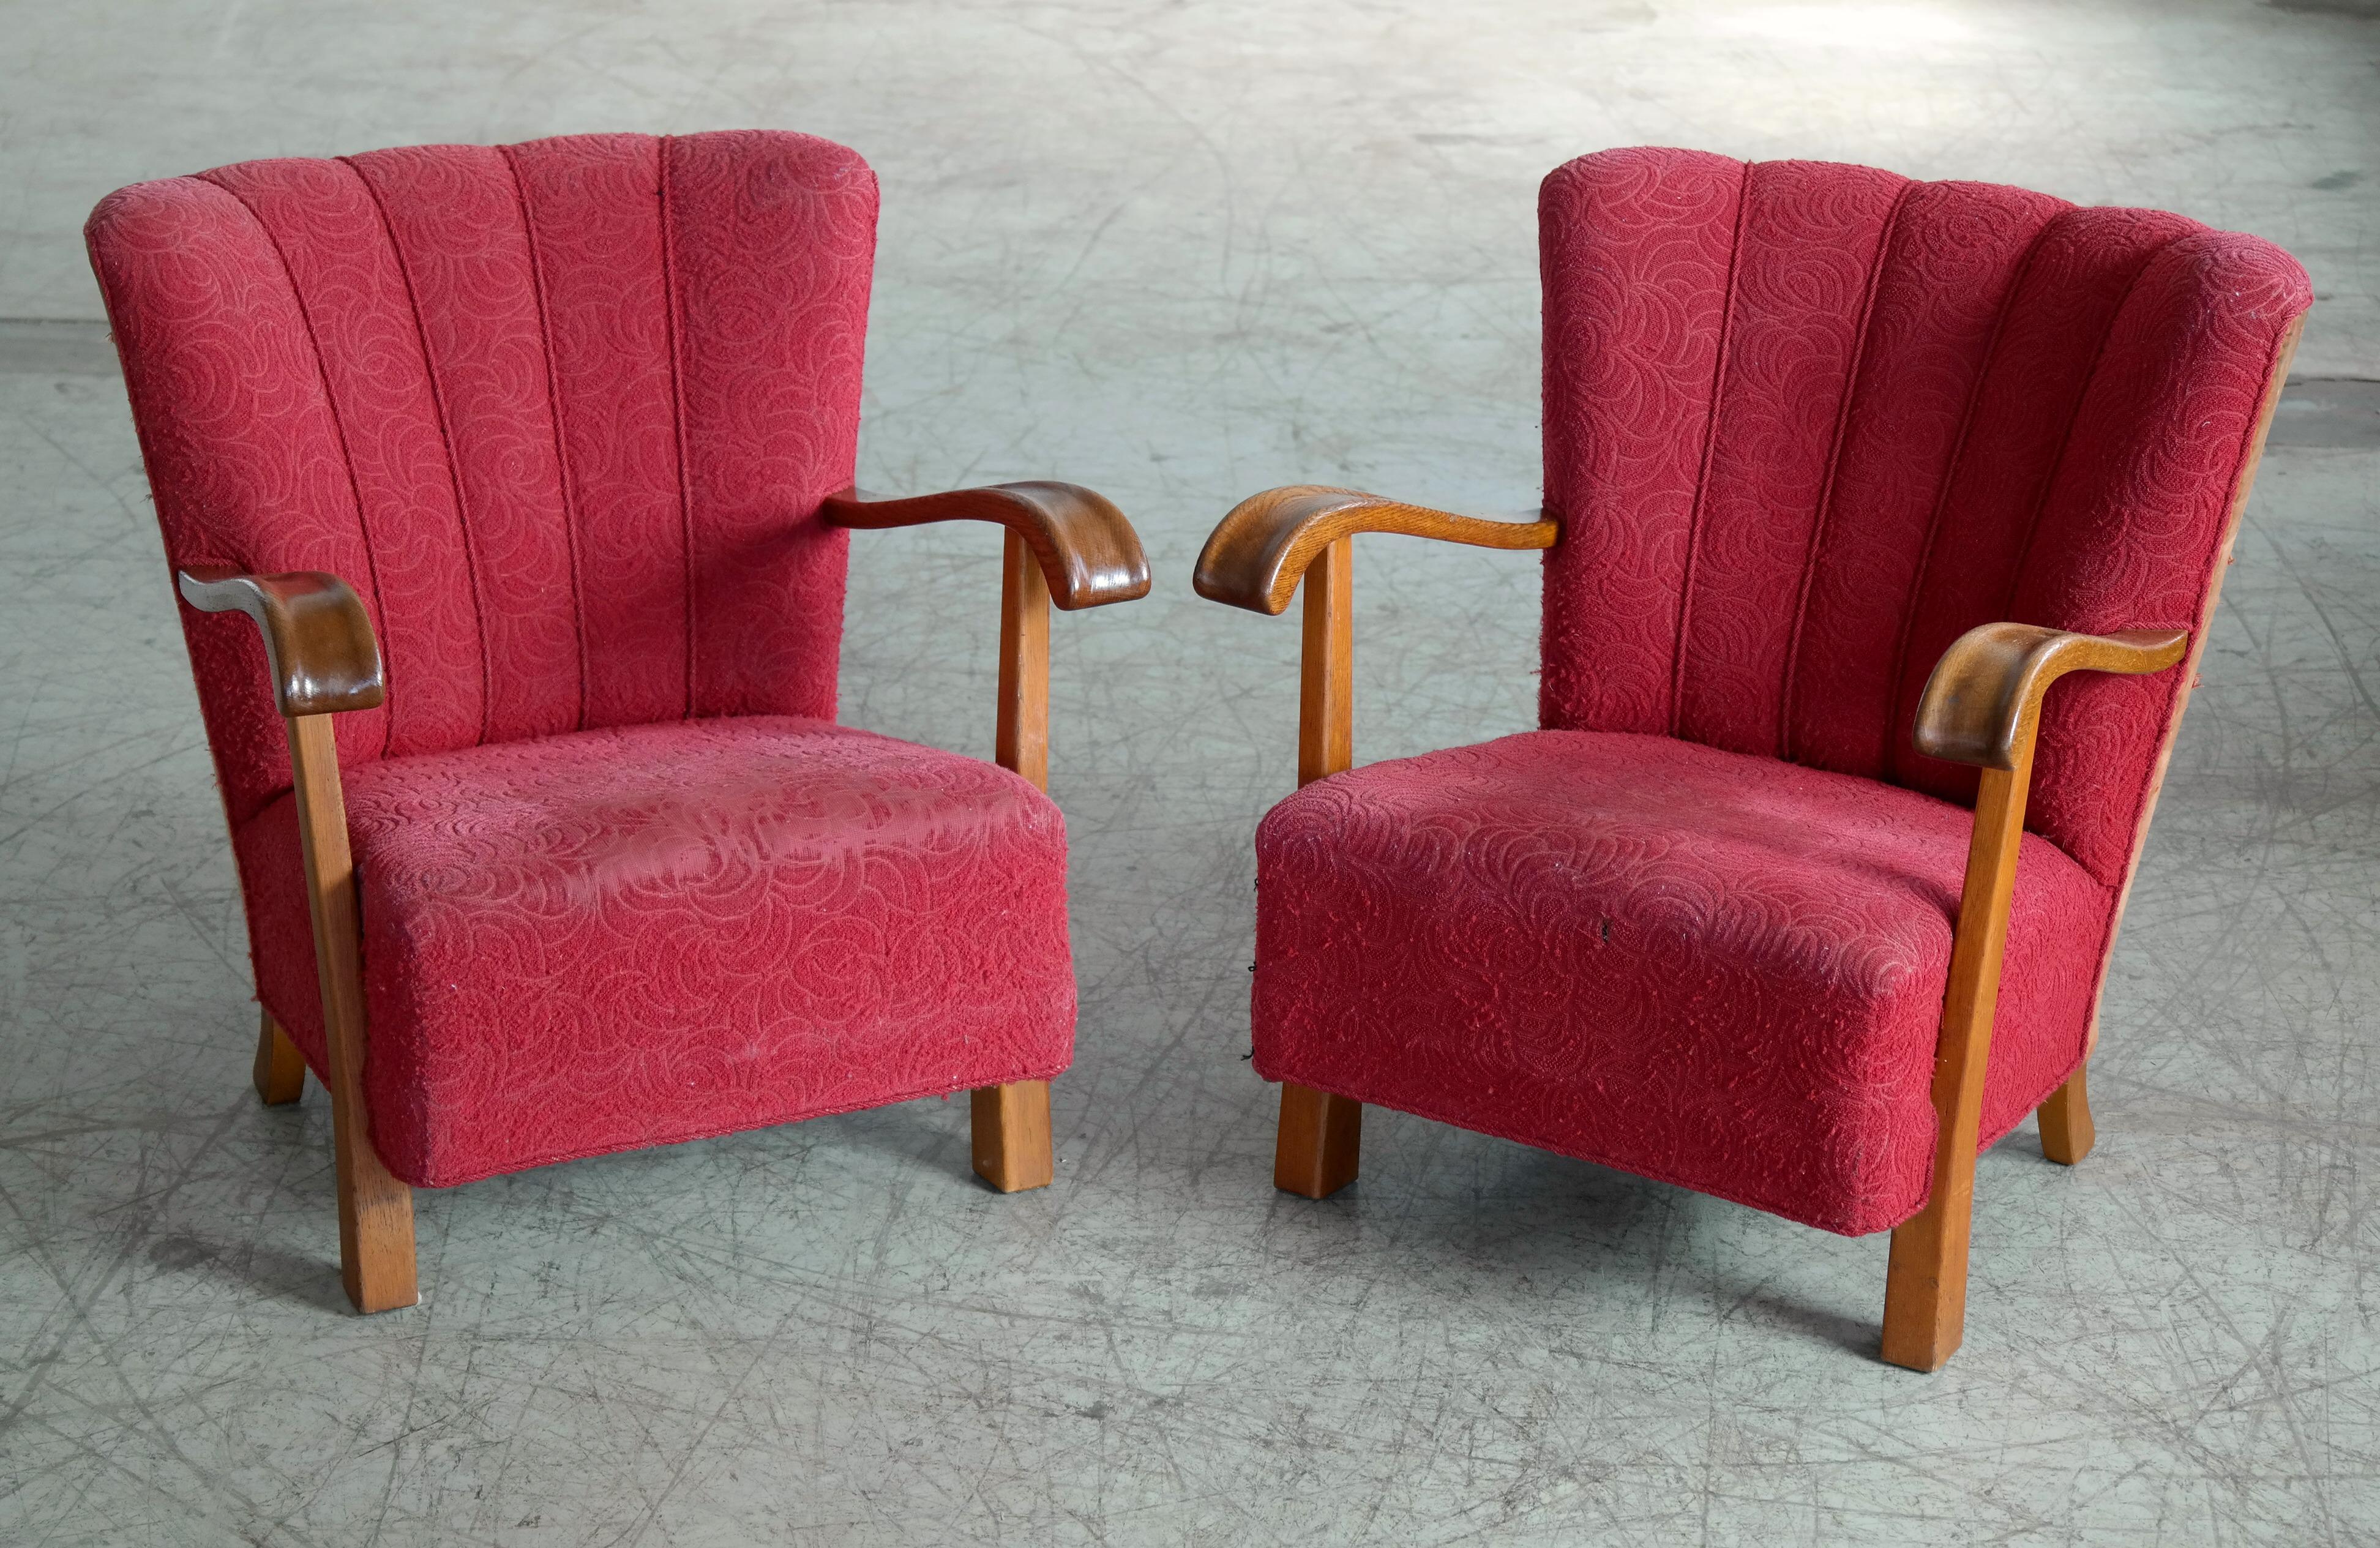 Mid-Century Modern 1940s Open Arm Lounge Club Chairs Attributed to Fritz Hansen Danish Midcentury